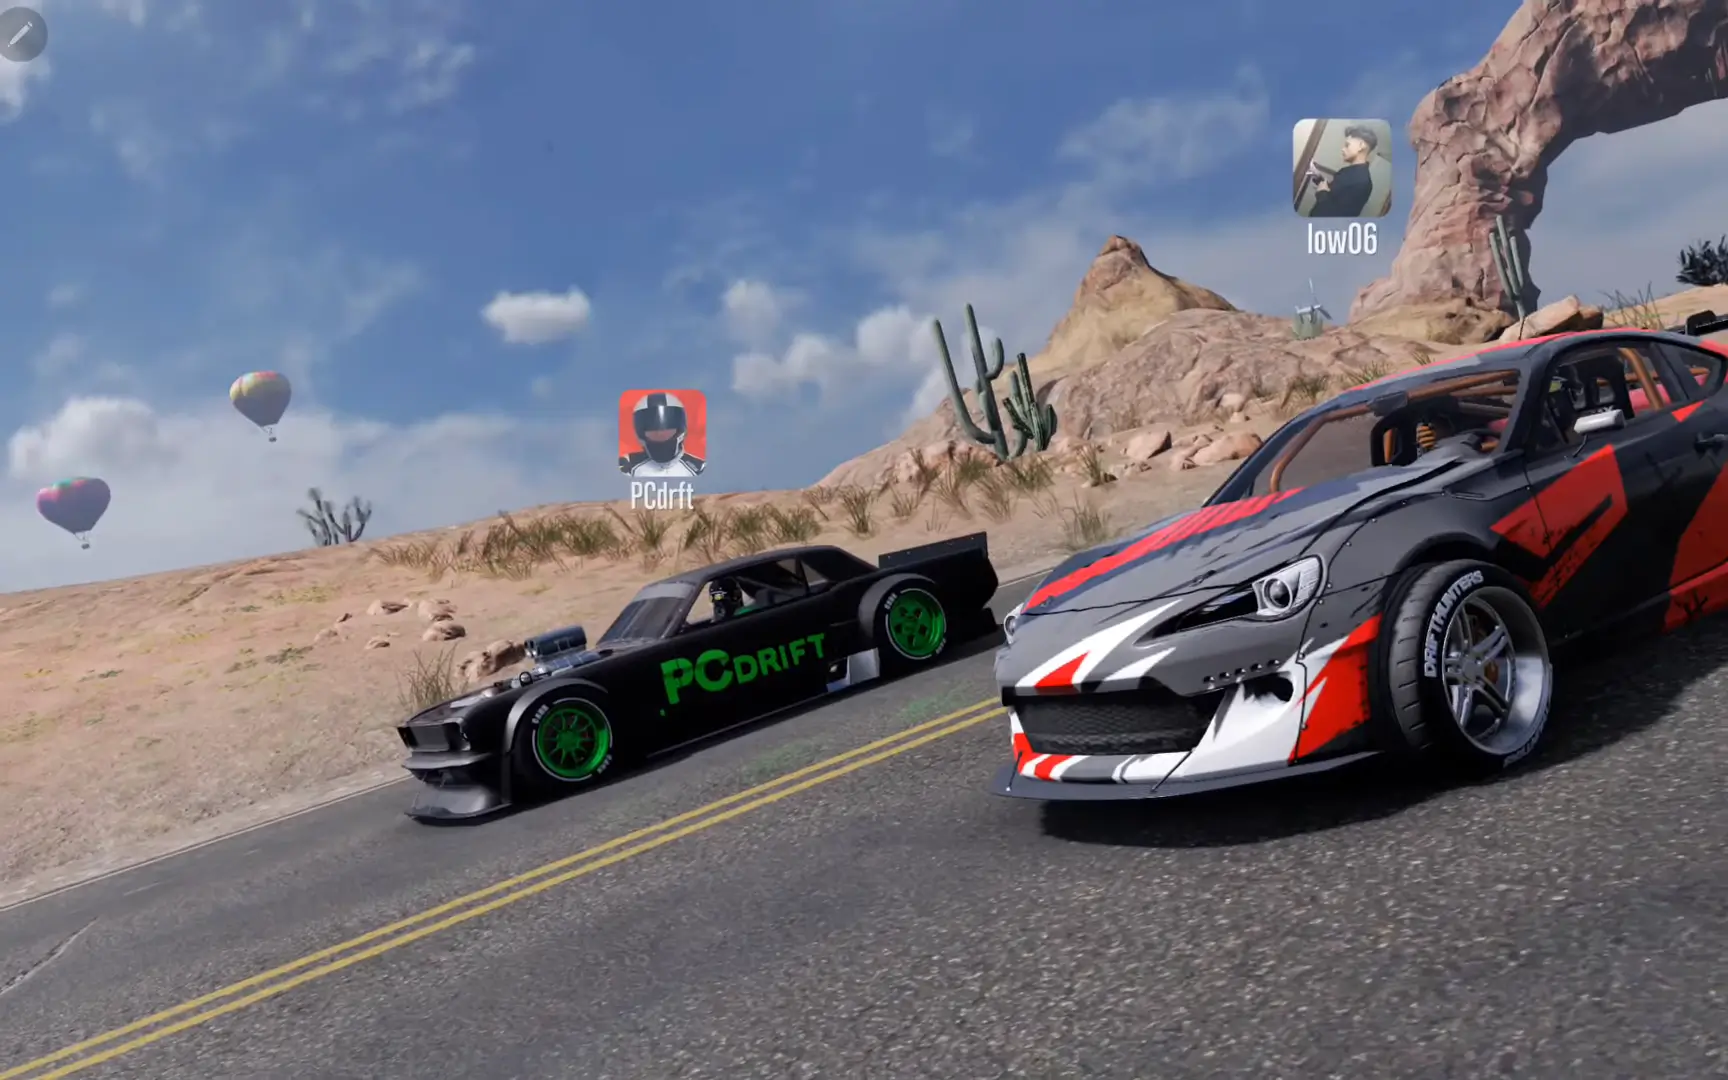 CarX Drift Racing 2 Mod APK v1.30.1 (Unlimited Money)